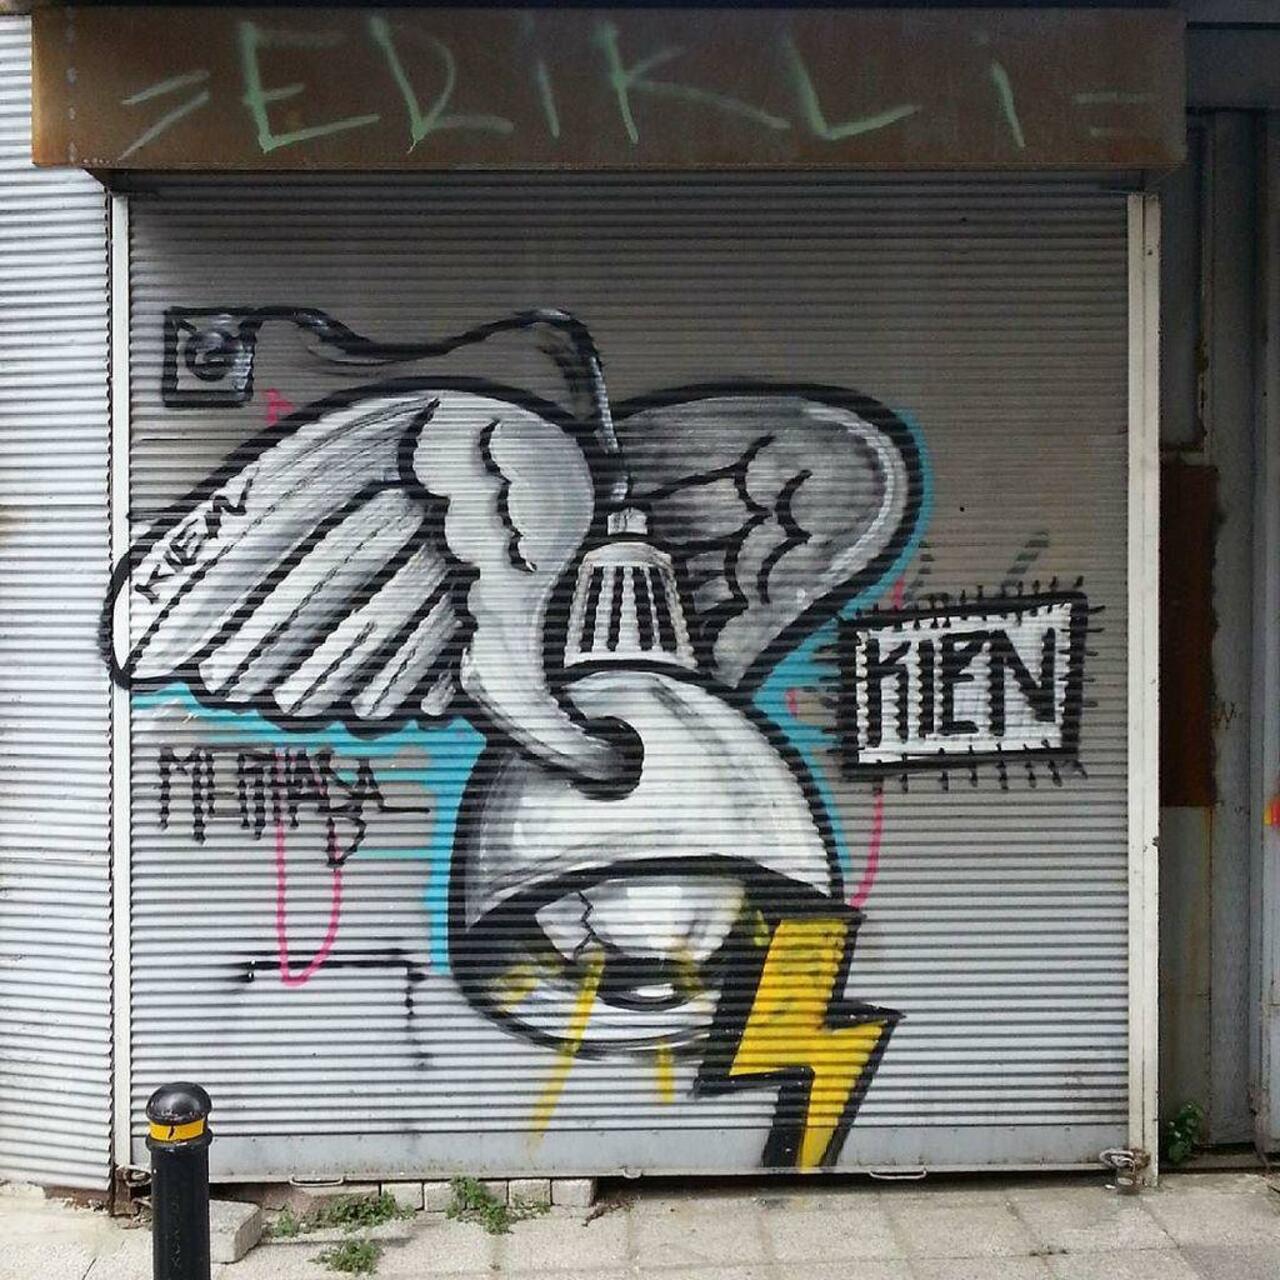 #streetartkadikoy #streetart #graffiti #publicart #urbanart #sokaksanatı #streetartistanbul #istanbulstreetart #gra… http://t.co/TaCKifiwLq